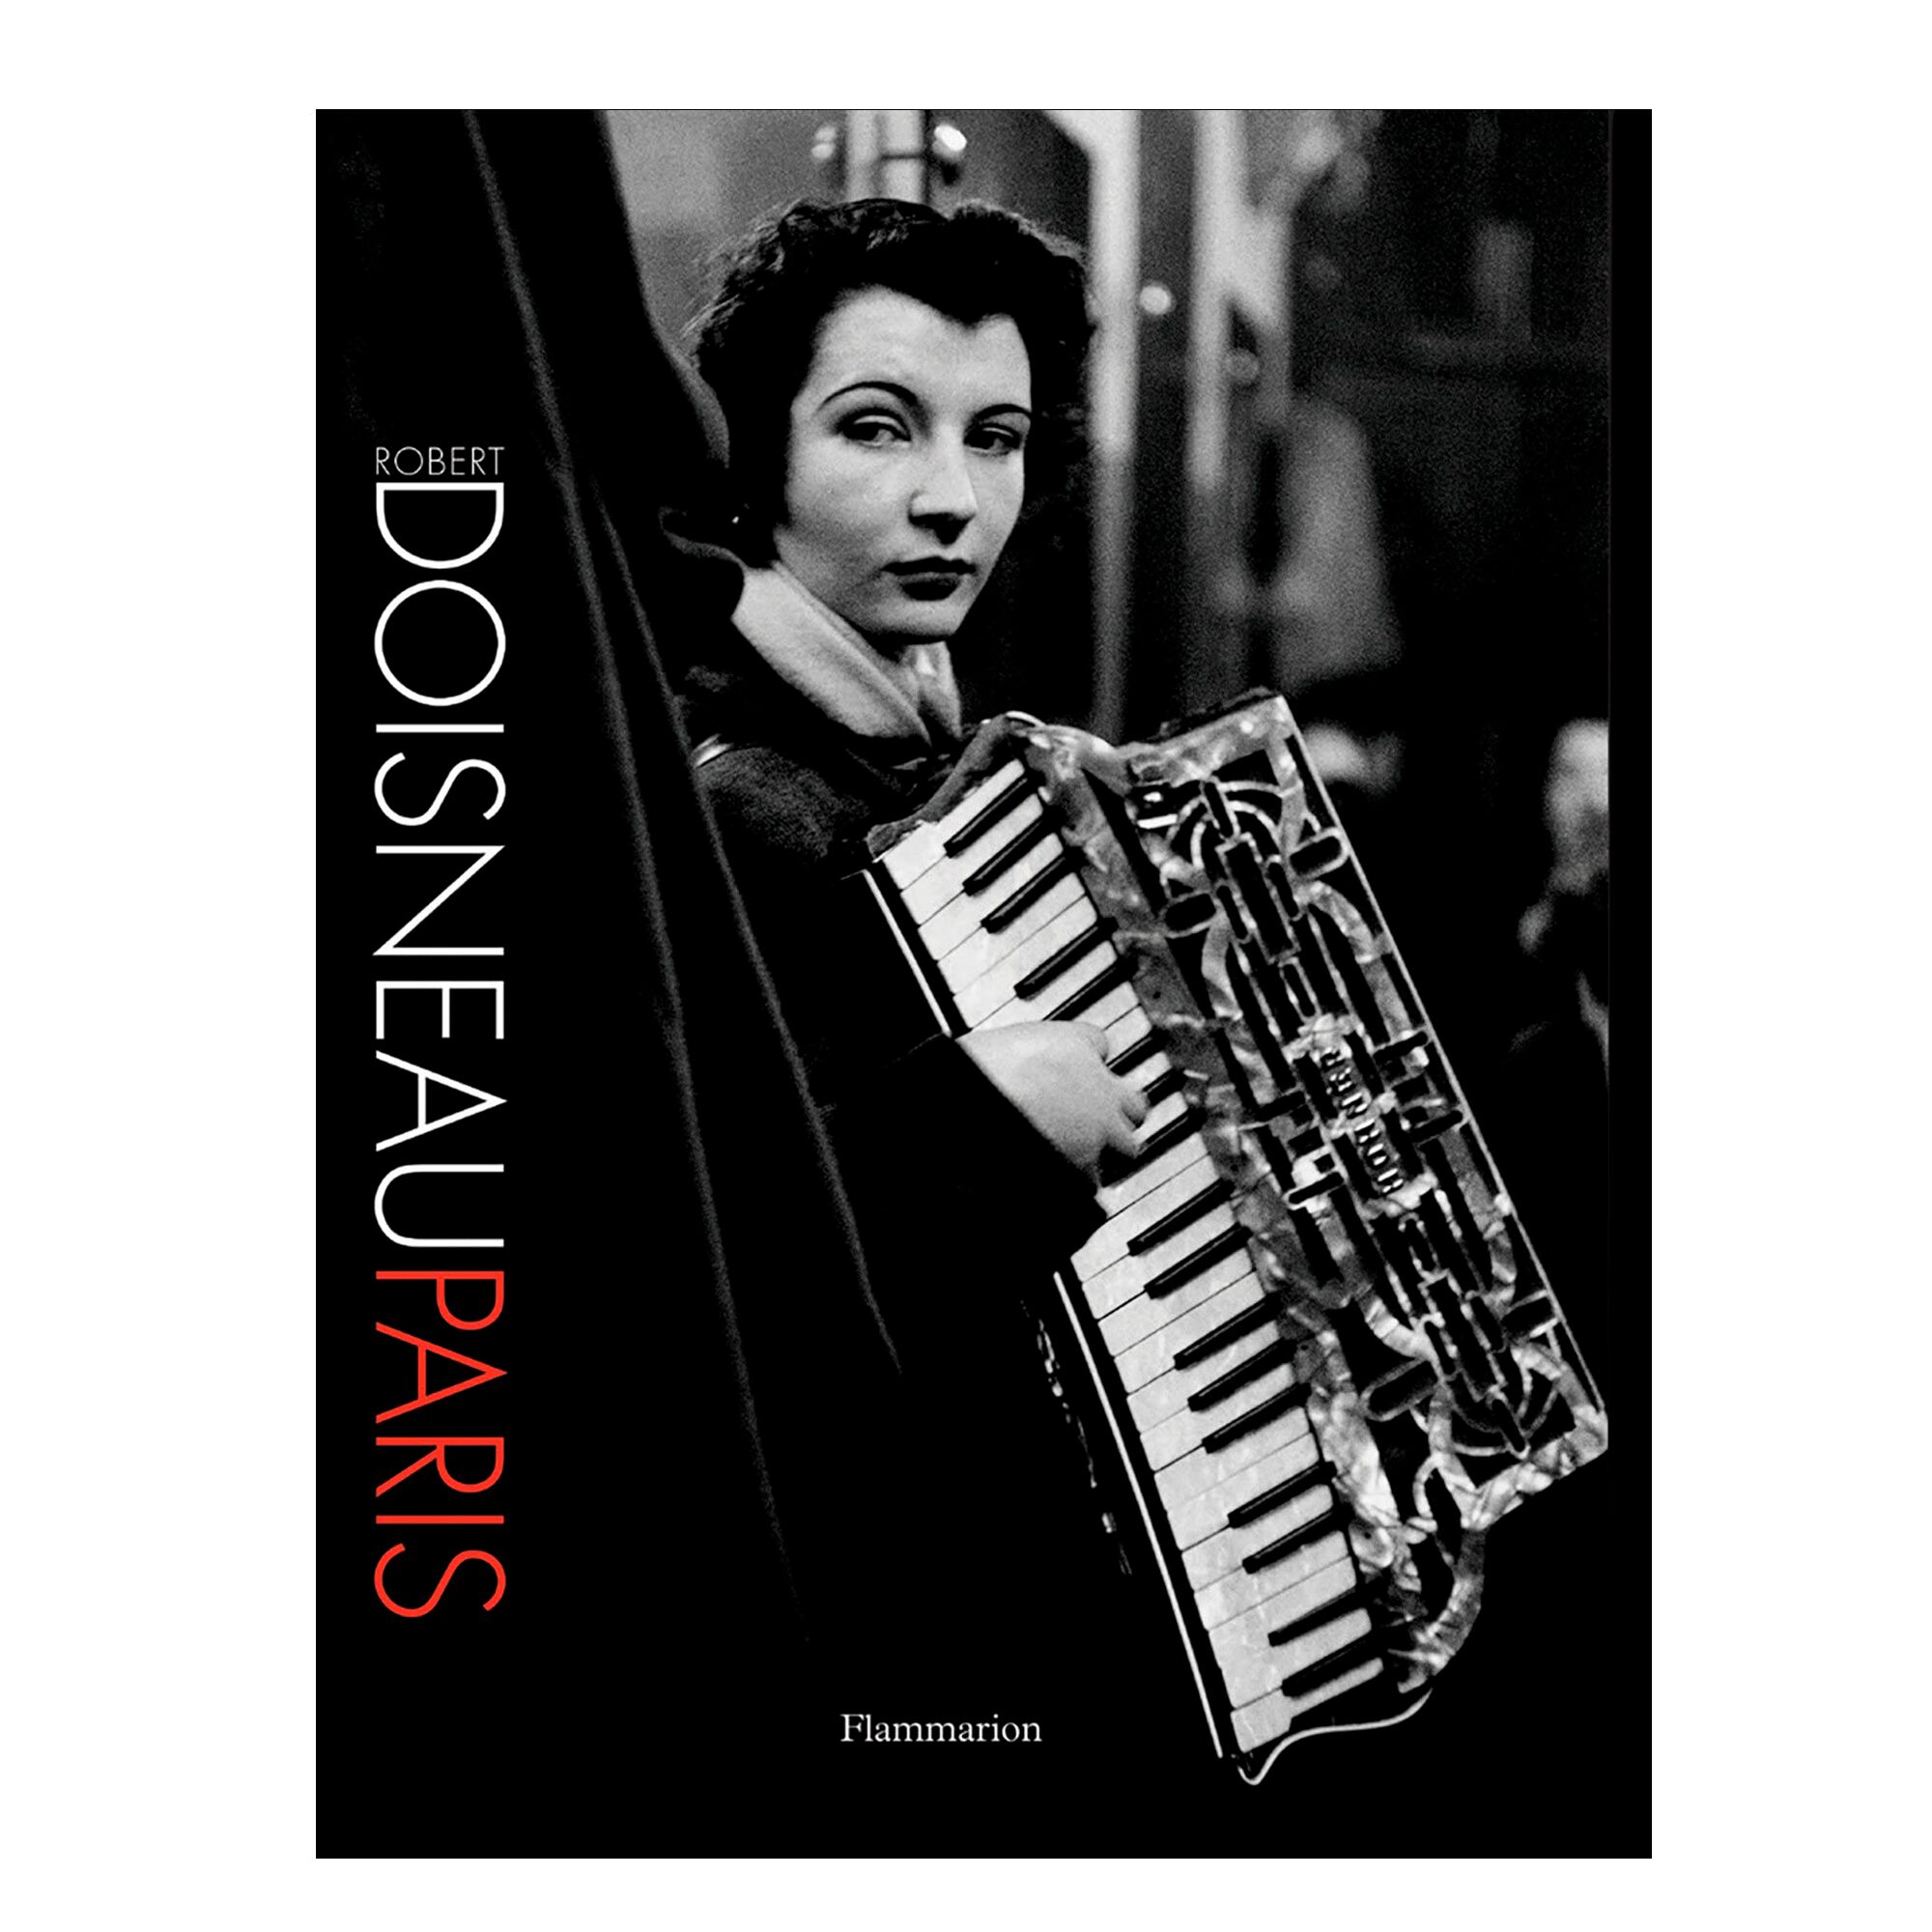 Robert Doisneau: Paris: New Compact Edition